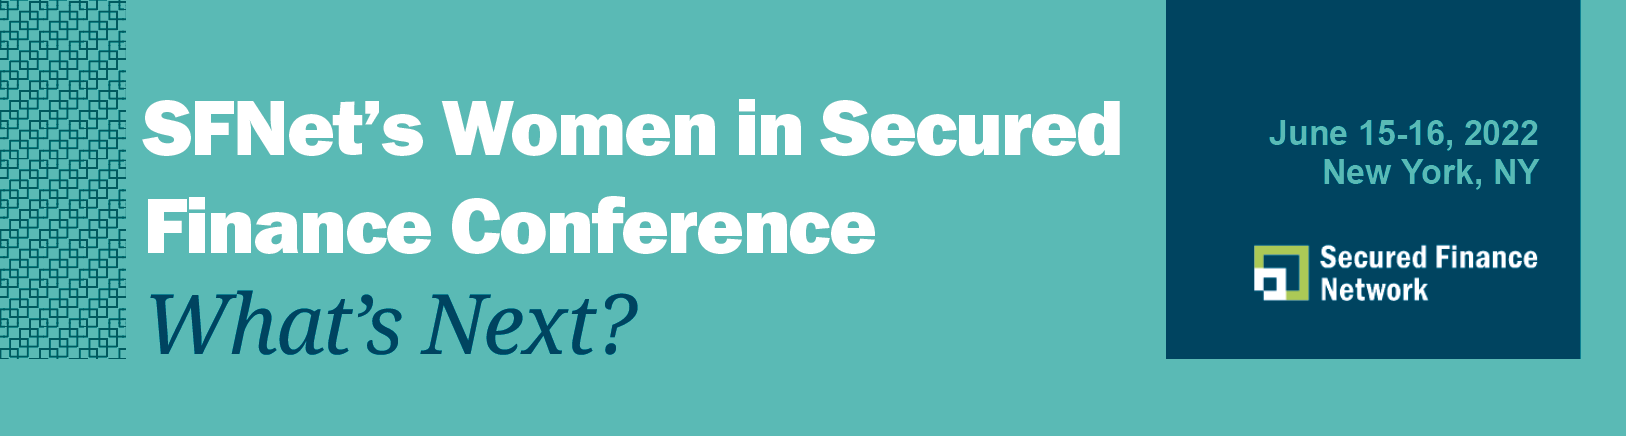 Women in Secured Finance Conference 2022 logo